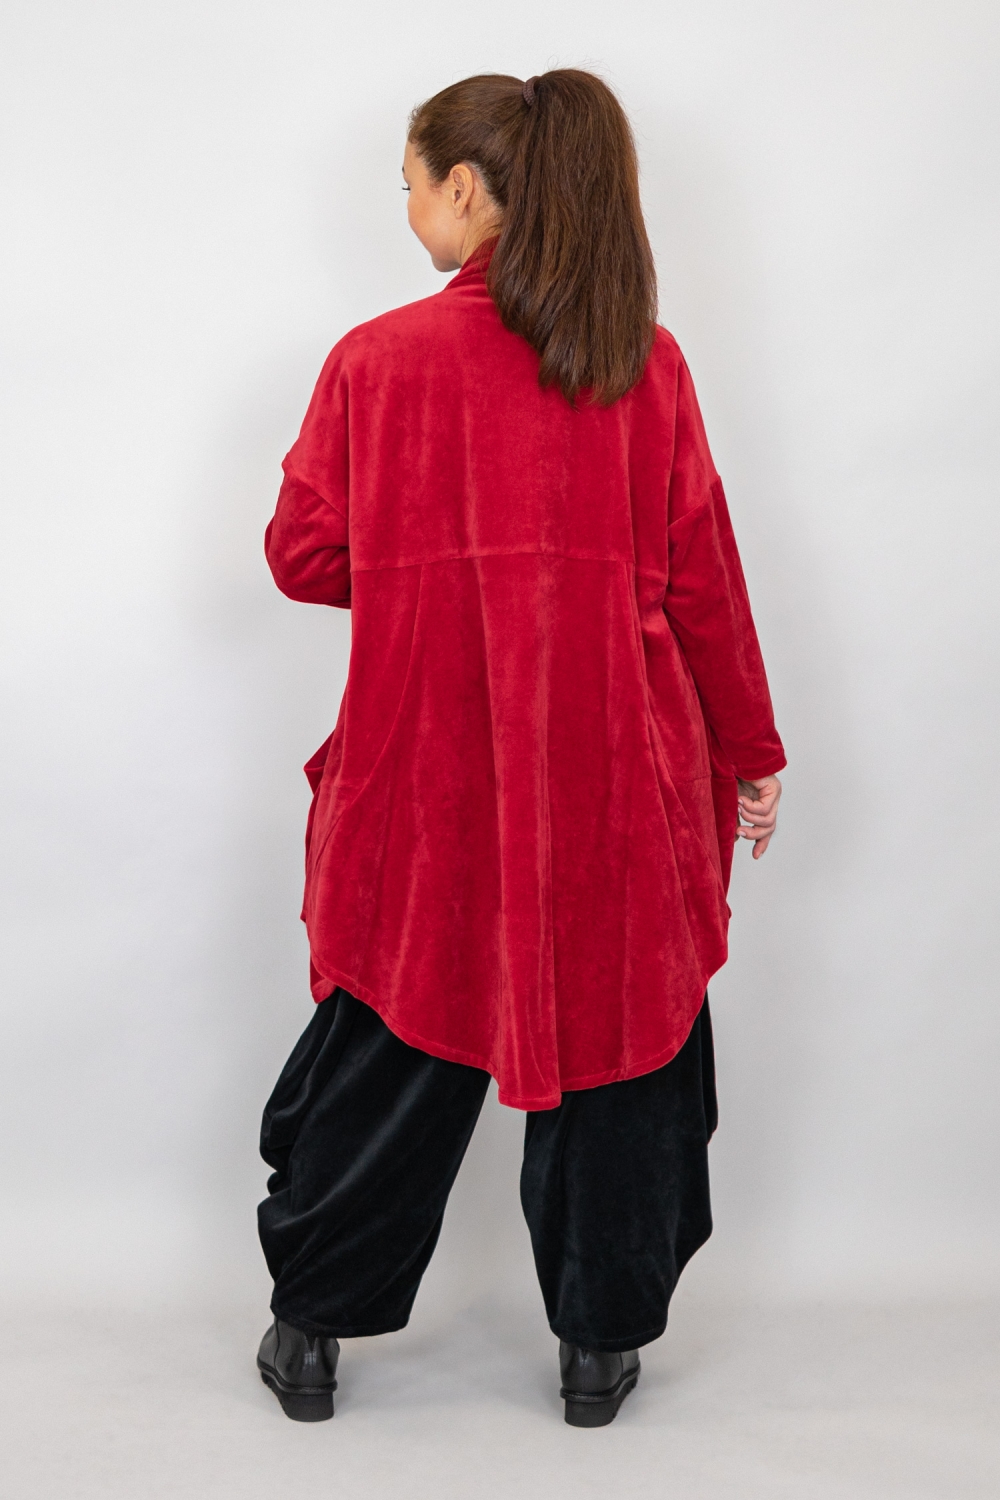 Sassy Jacke in Tulpenform aus Nicky Velours Stoff in rot